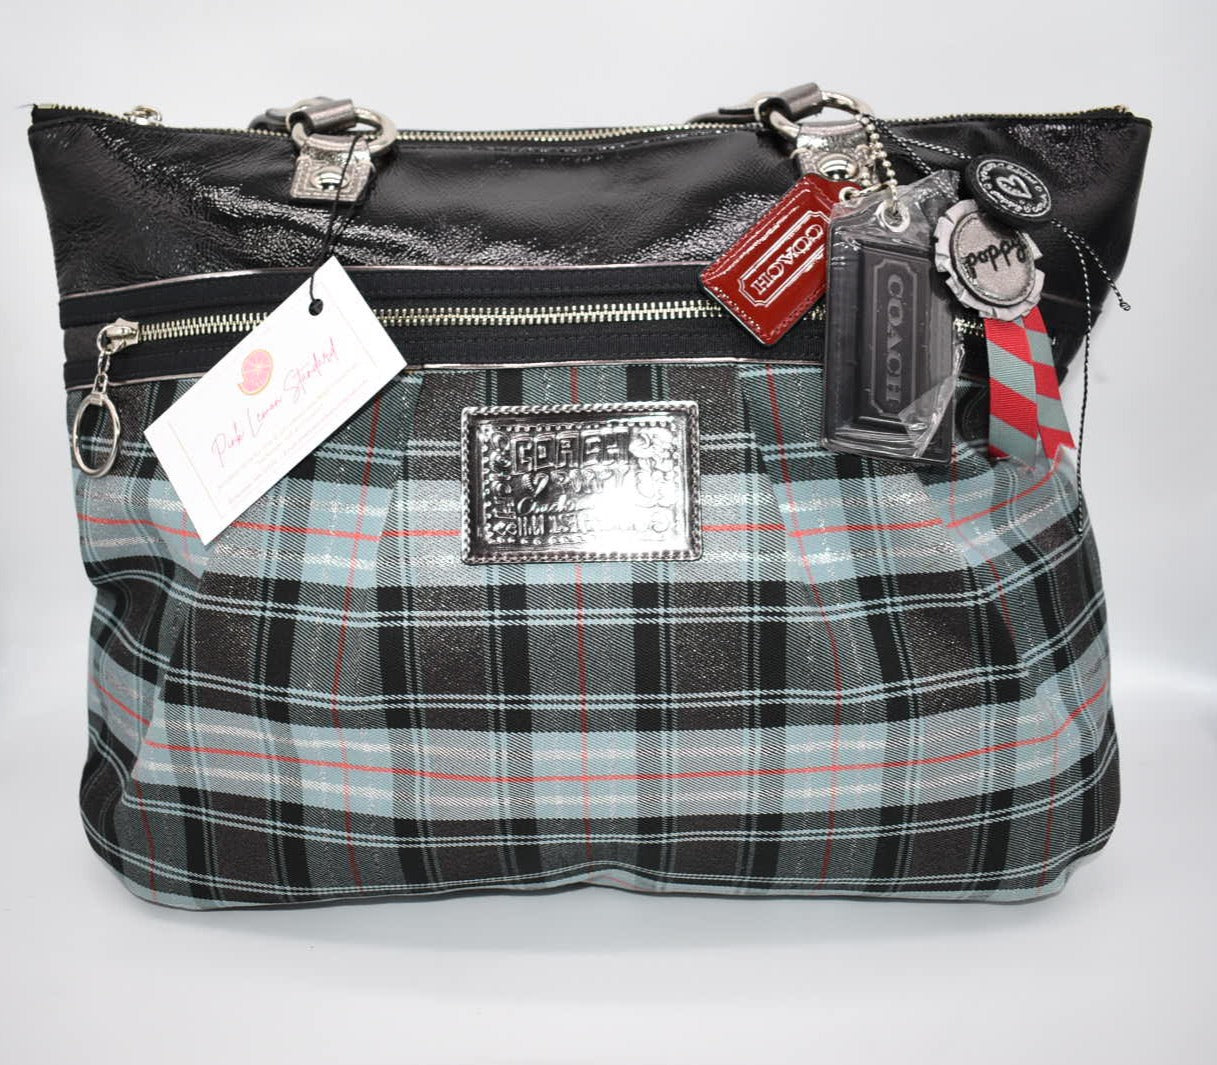 Coach Poppy Large Tartan Plaid Glam Tote Bag - Limited Edition